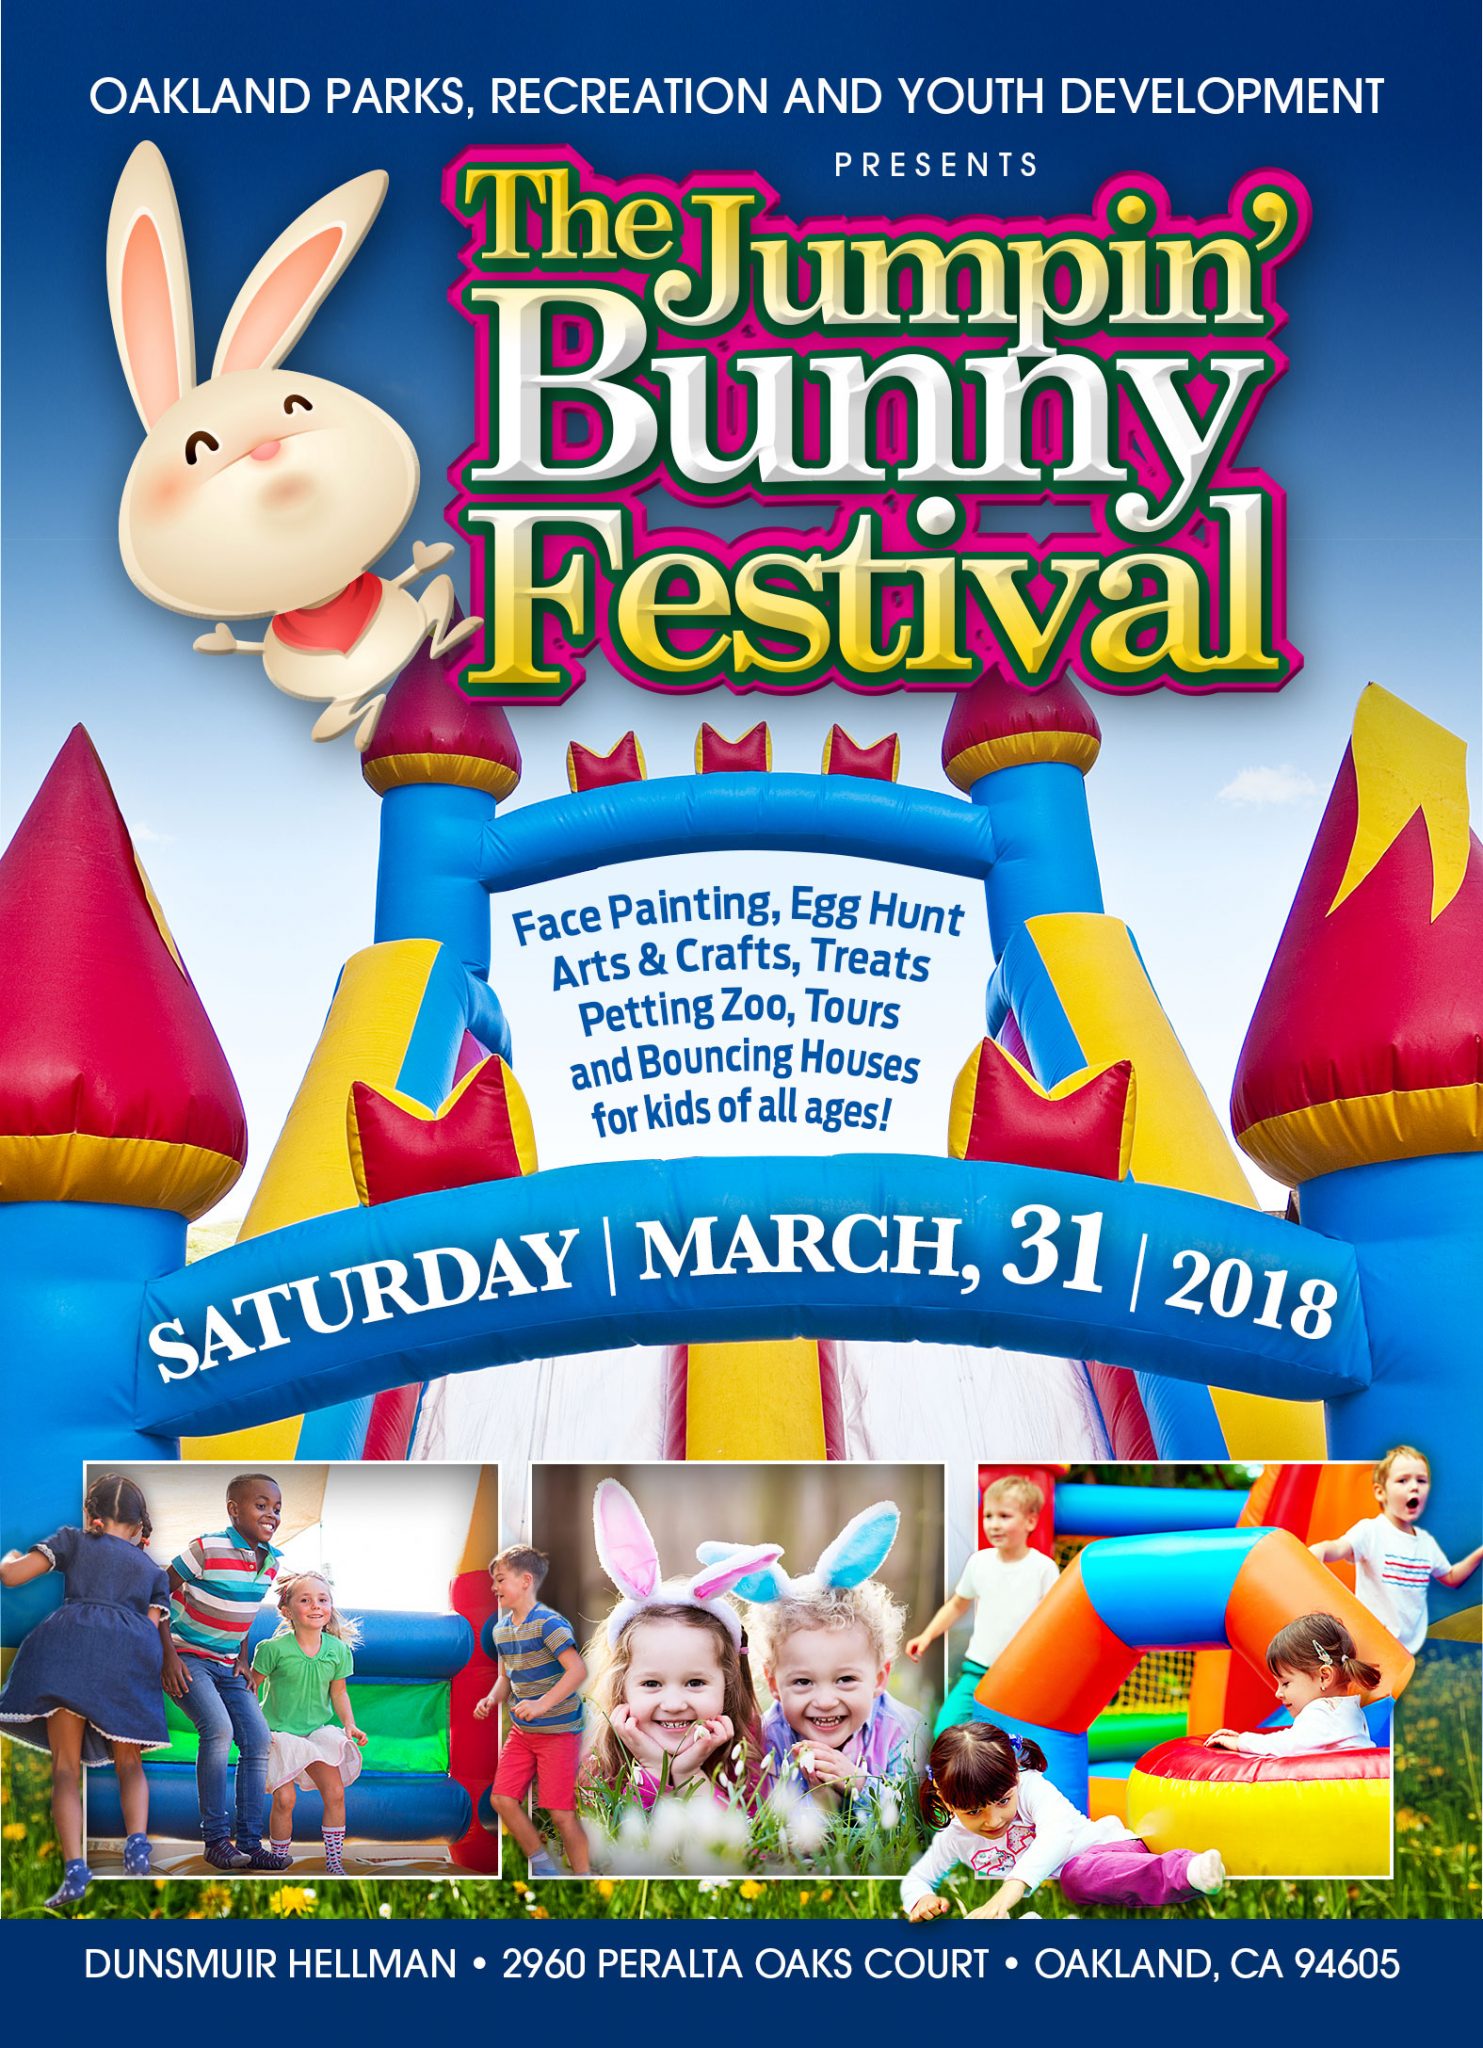 The Jumpin' Bunny Festival